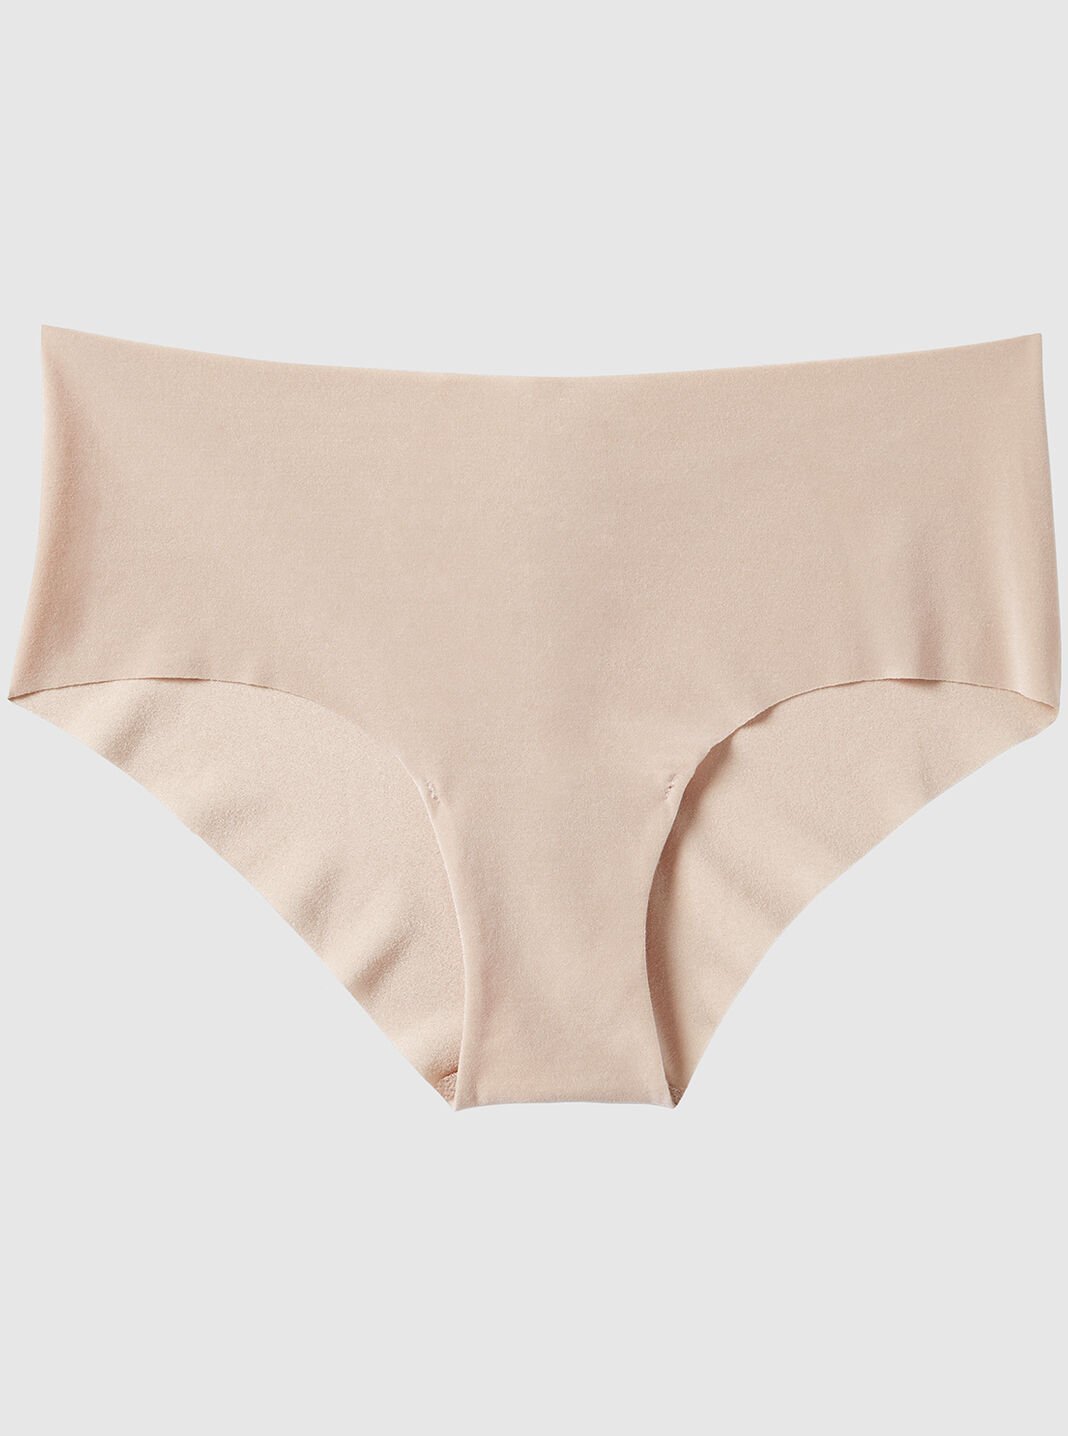 kamison INTERNATIONAL LINGERIE No Show Underwear for Women Seamless High  Cut Briefs Mid-Waist Soft No Panty Lines,Pack of 4